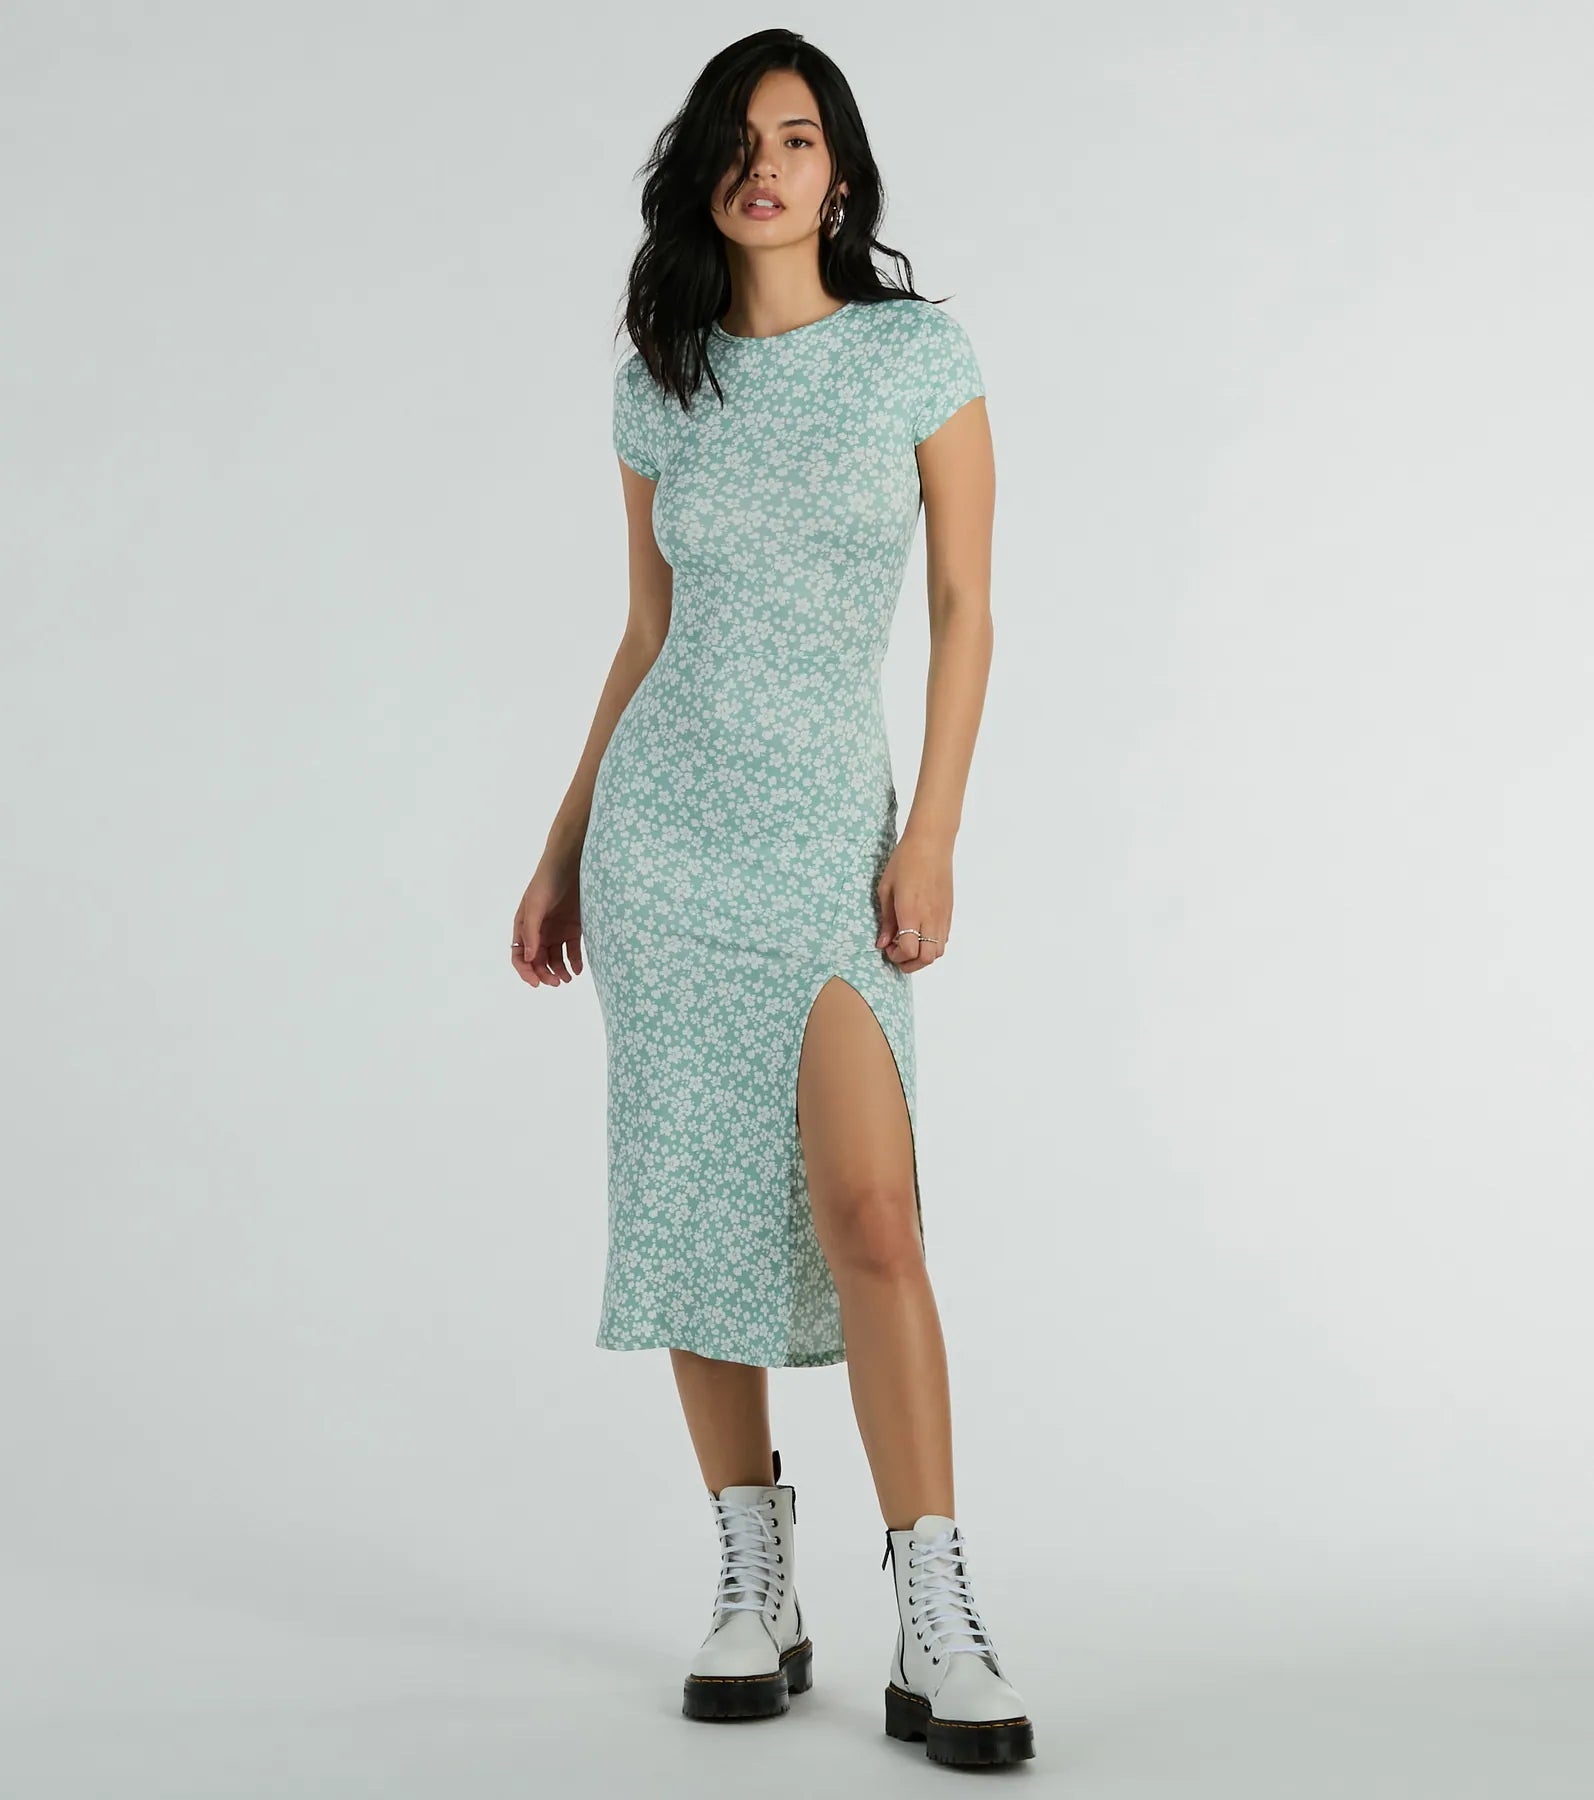 Stretchy Cutout Slit Short Sleeves Sleeves Spring Crew Neck Floral Print Knit Bodycon Dress/Midi Dress